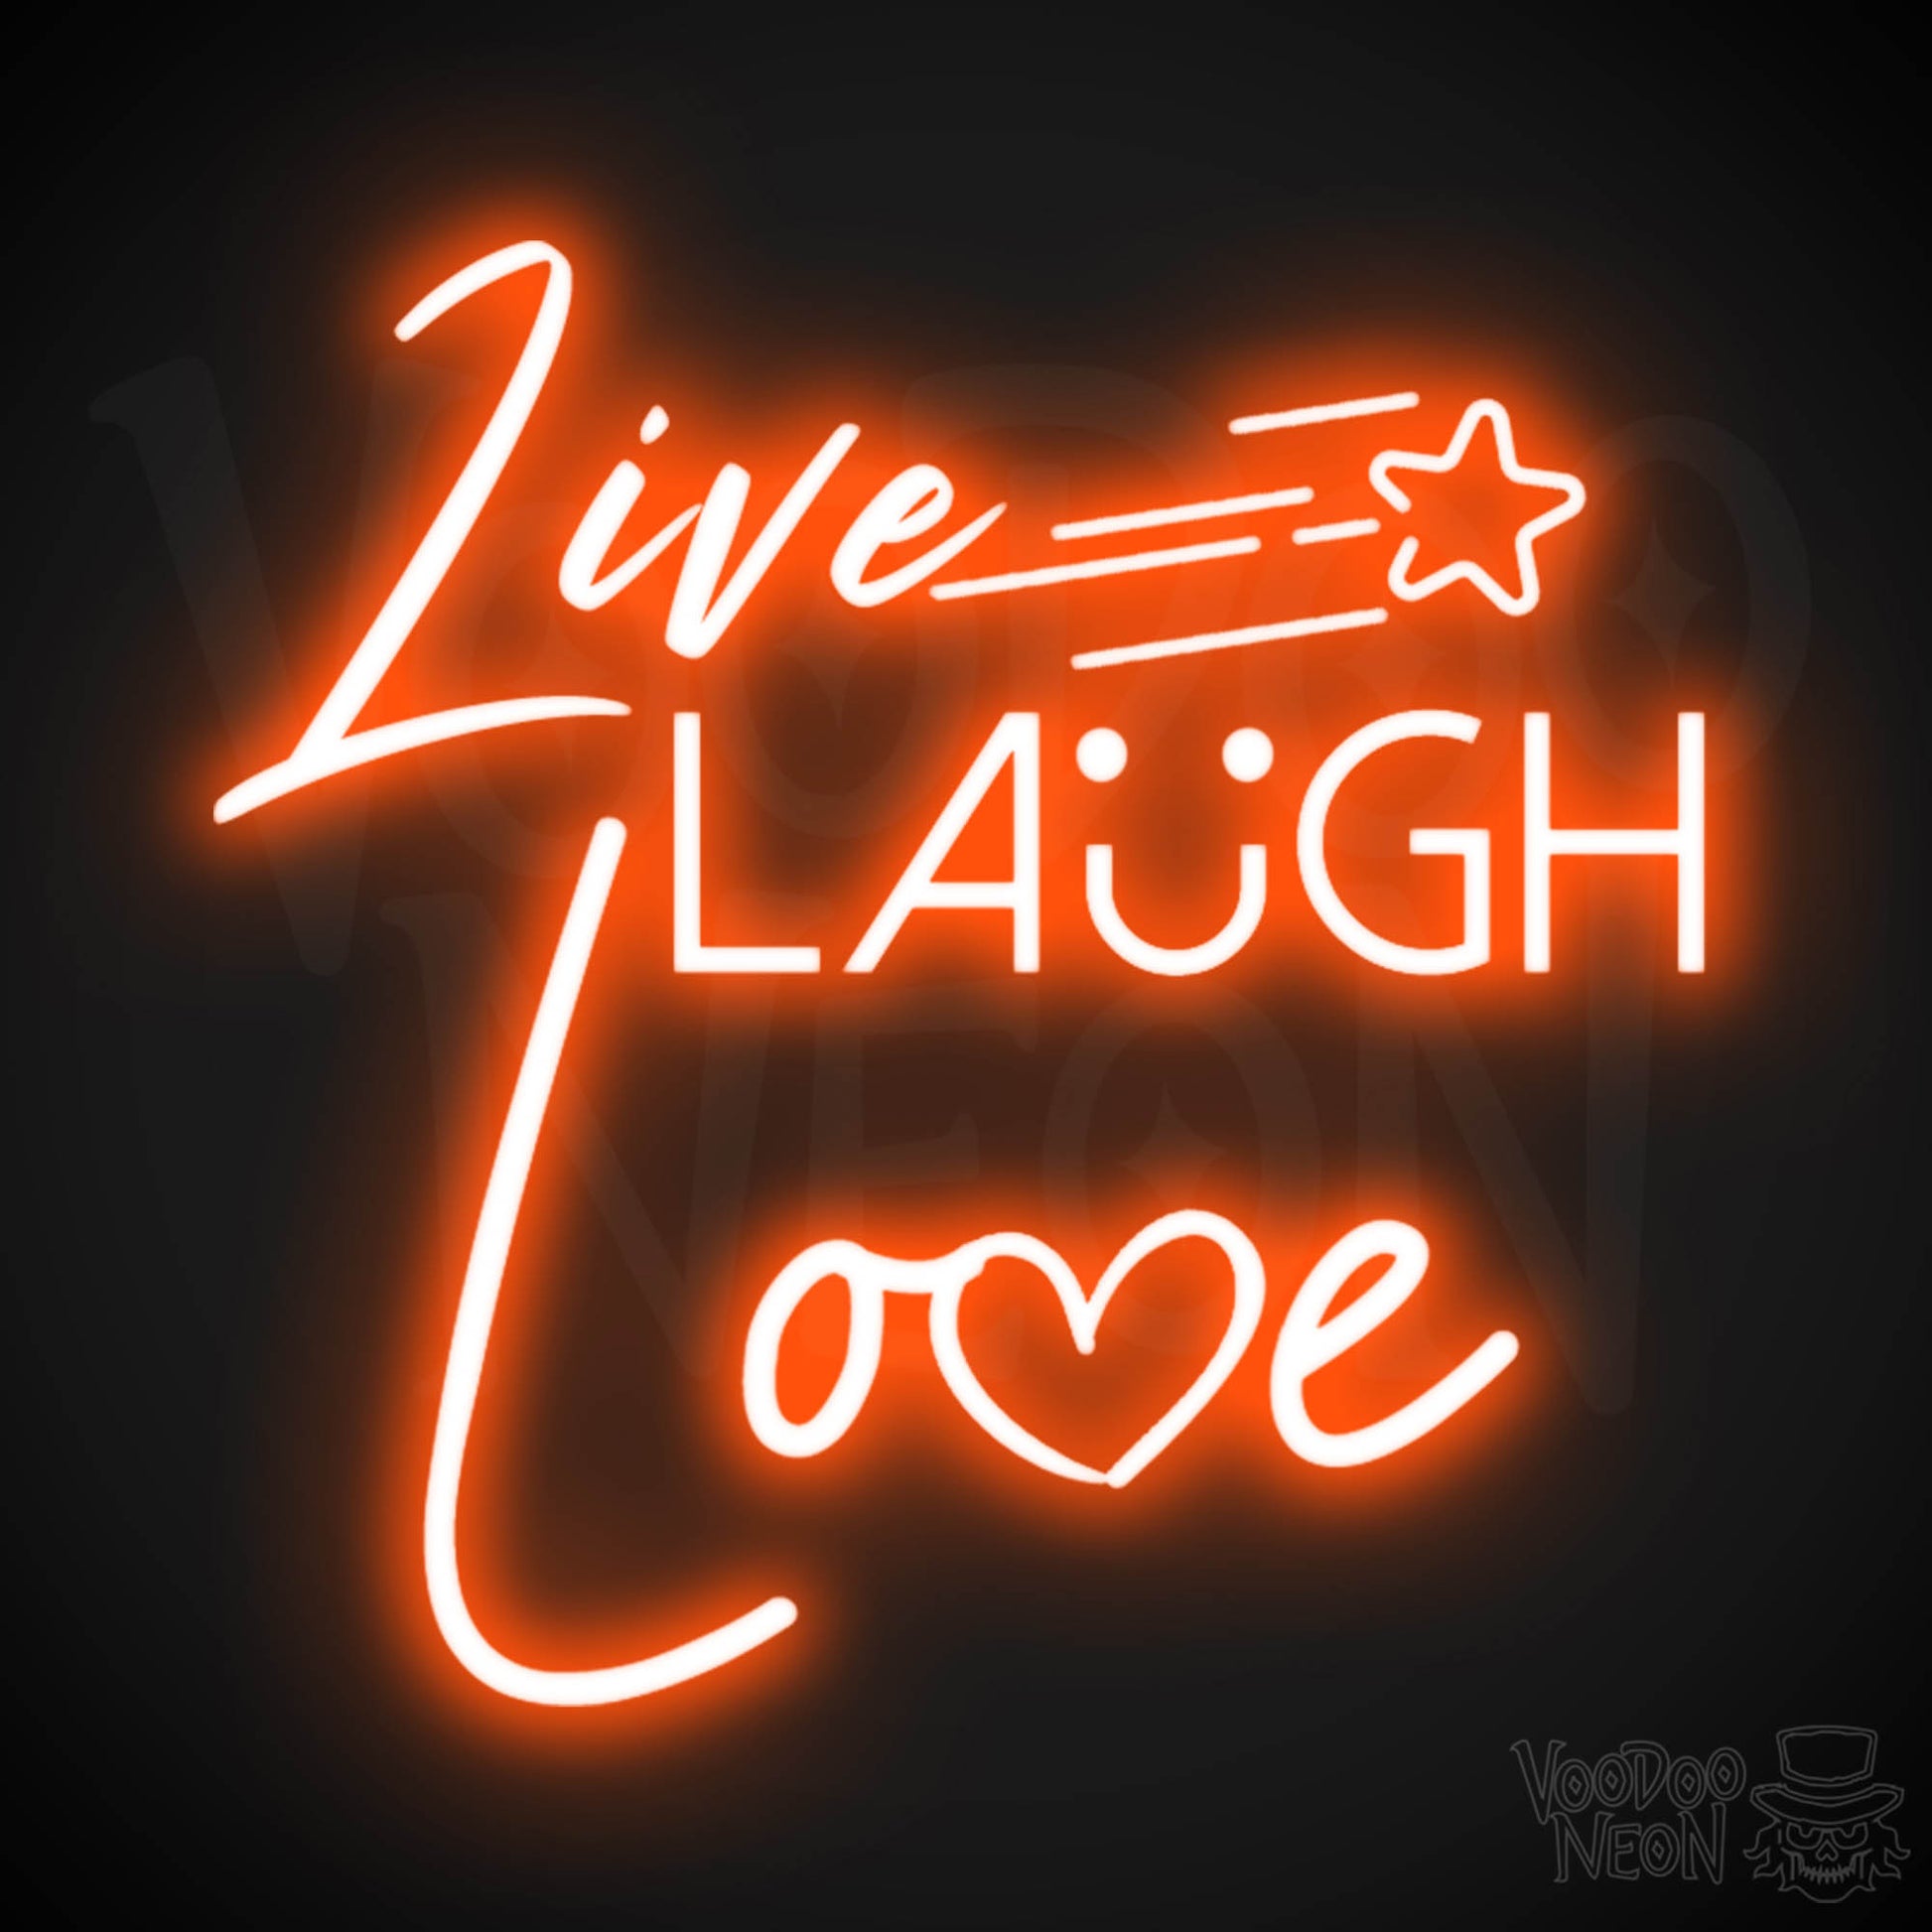 Live Laugh Love Neon Sign - Neon Live Laugh Love Sign - Wall Art - Color Orange